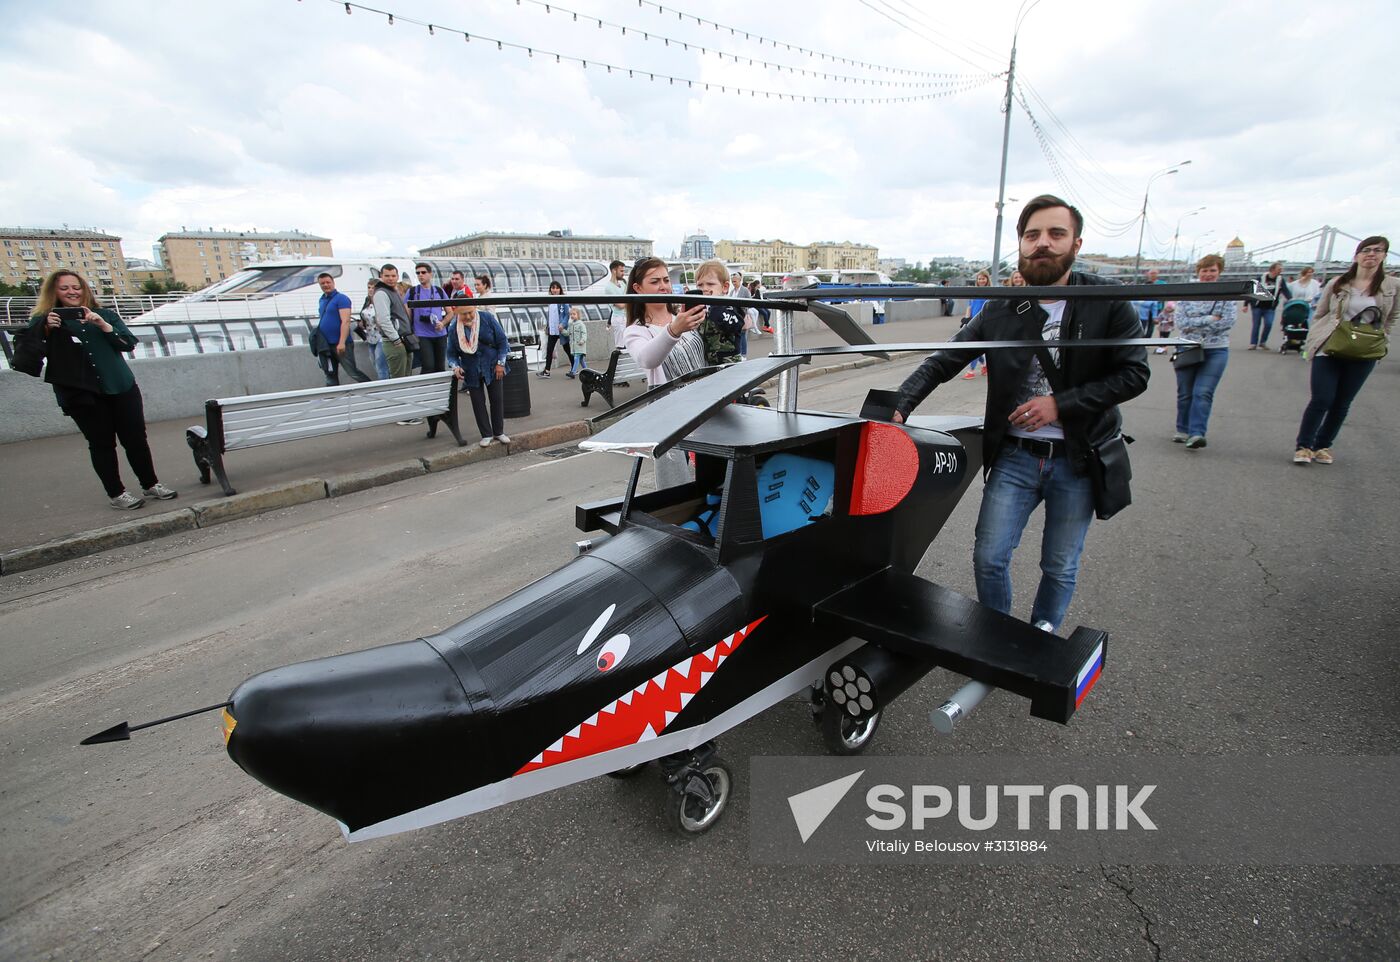 Stroller parade in Gorky Park